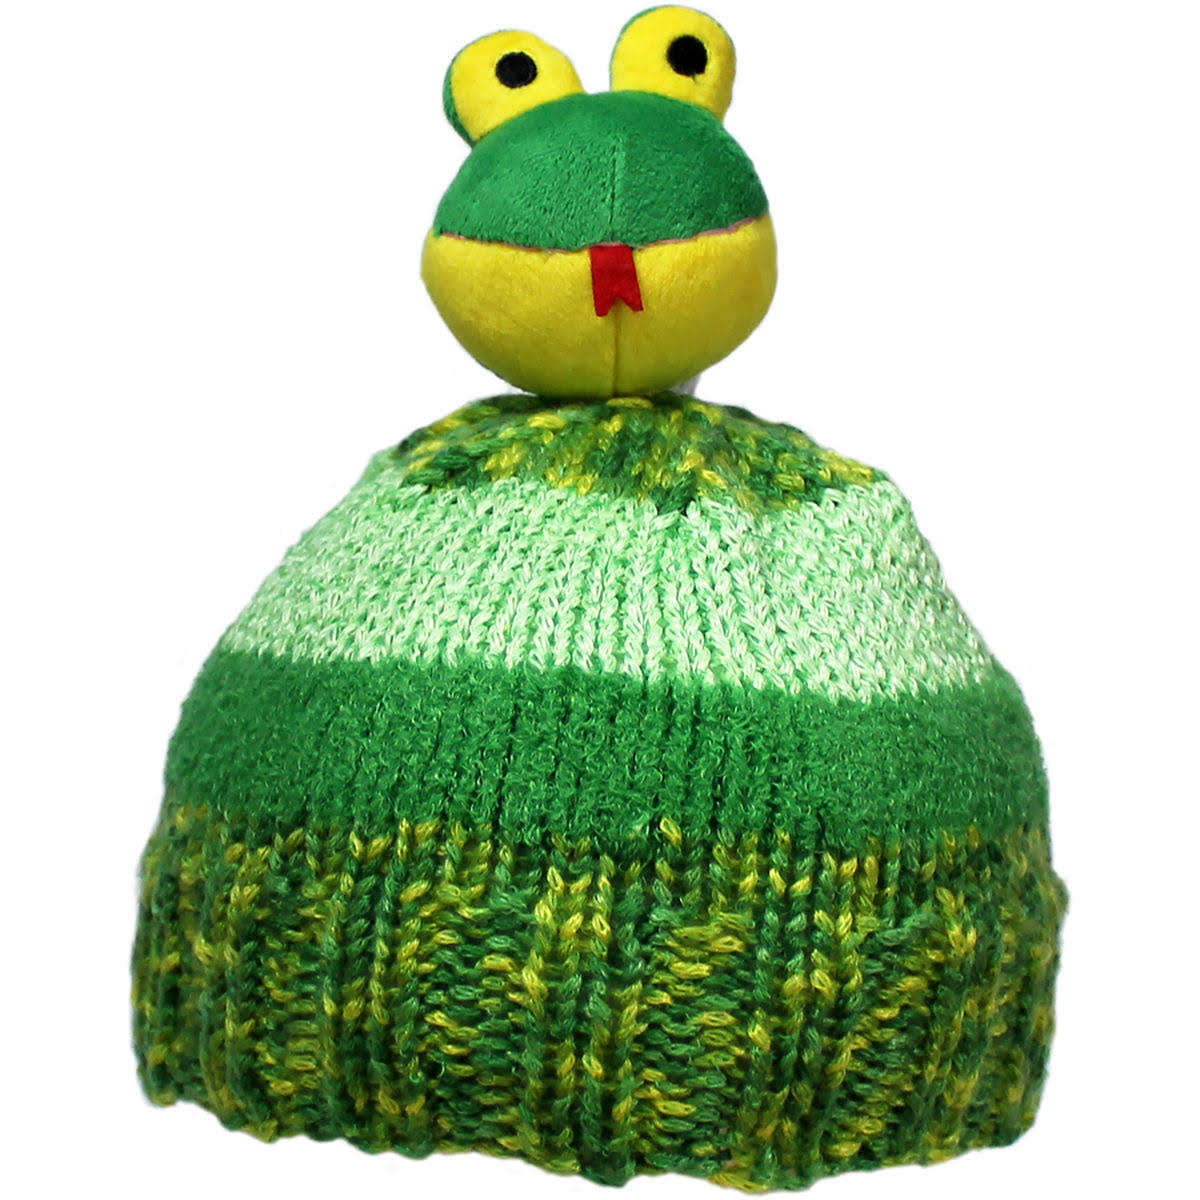 DMC Yarn Kit - Top This Glow In the Dark Frog